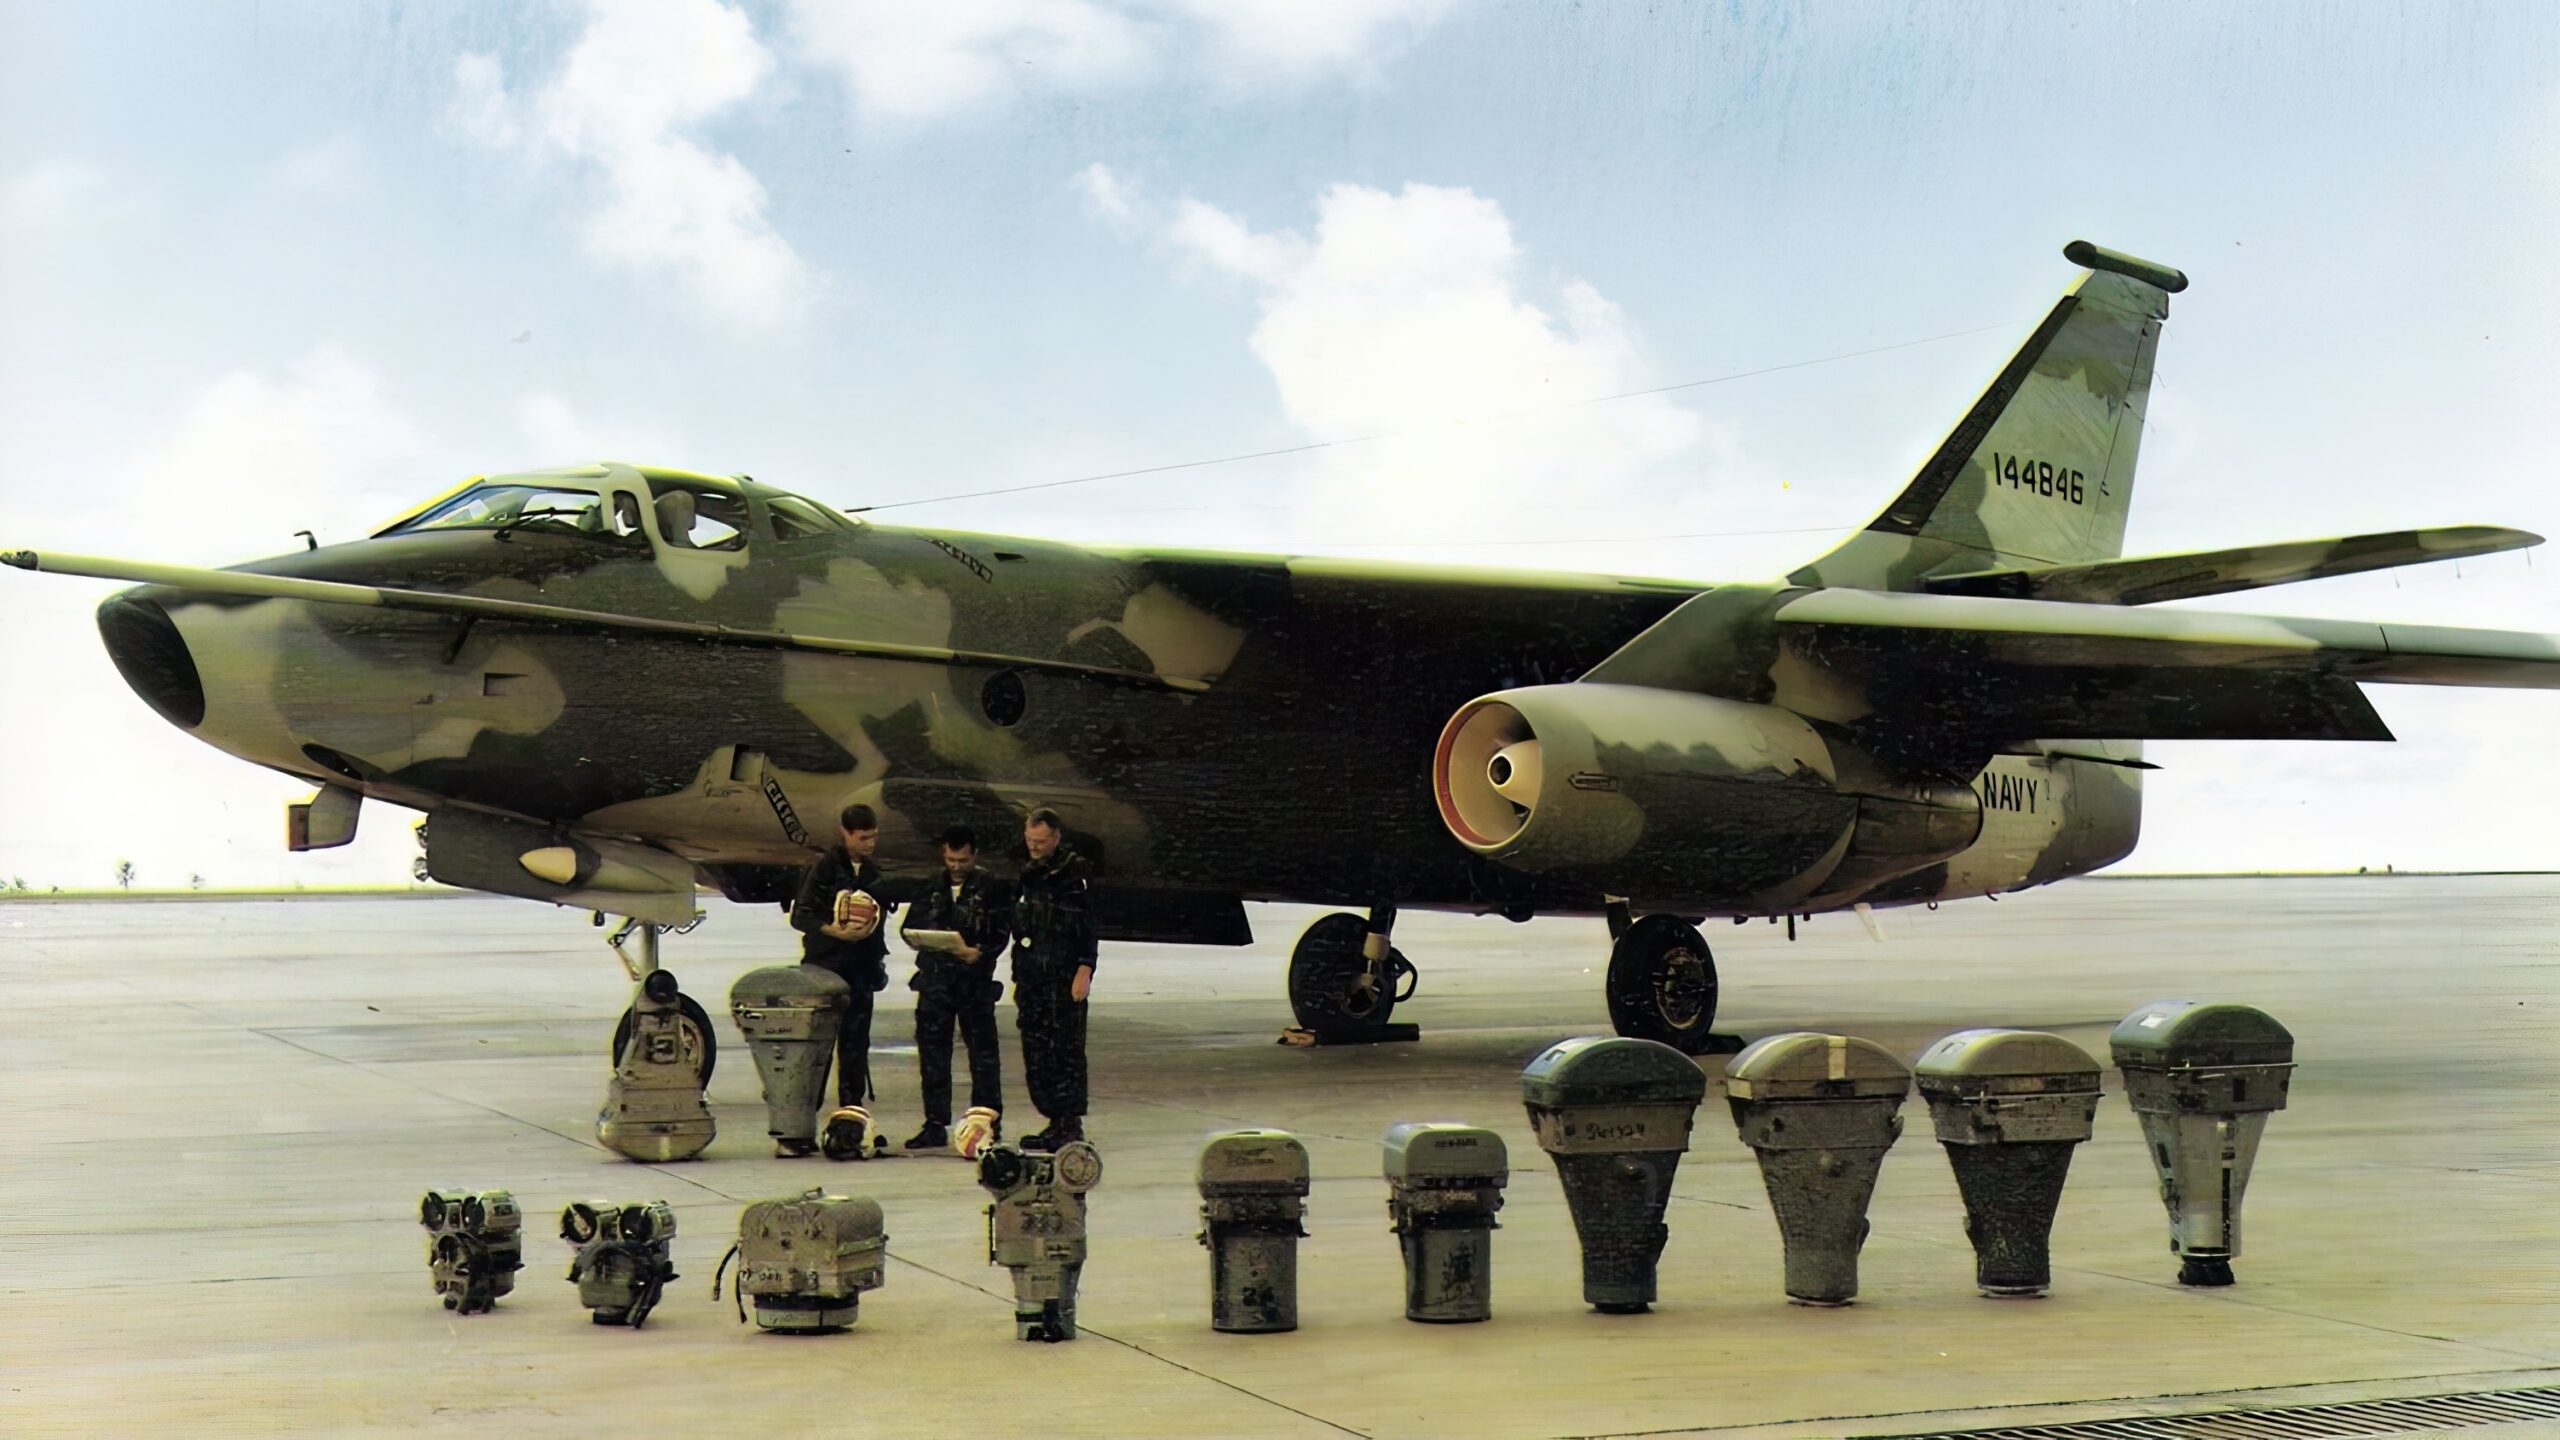 A camouflaged U.S. Navy Douglas RA-3B Skywarrior aircraft